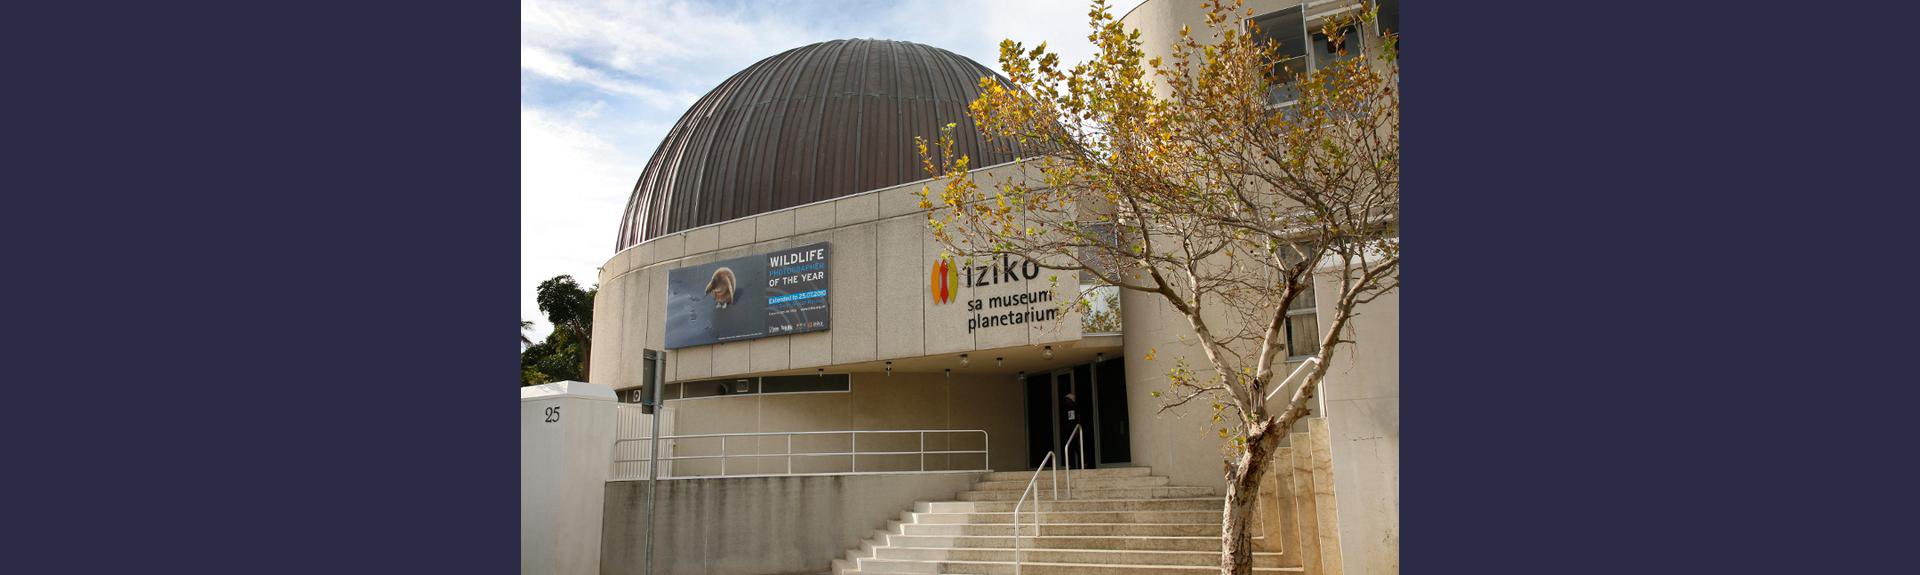 Iziko Planetarium family friendly activity in Cape Town